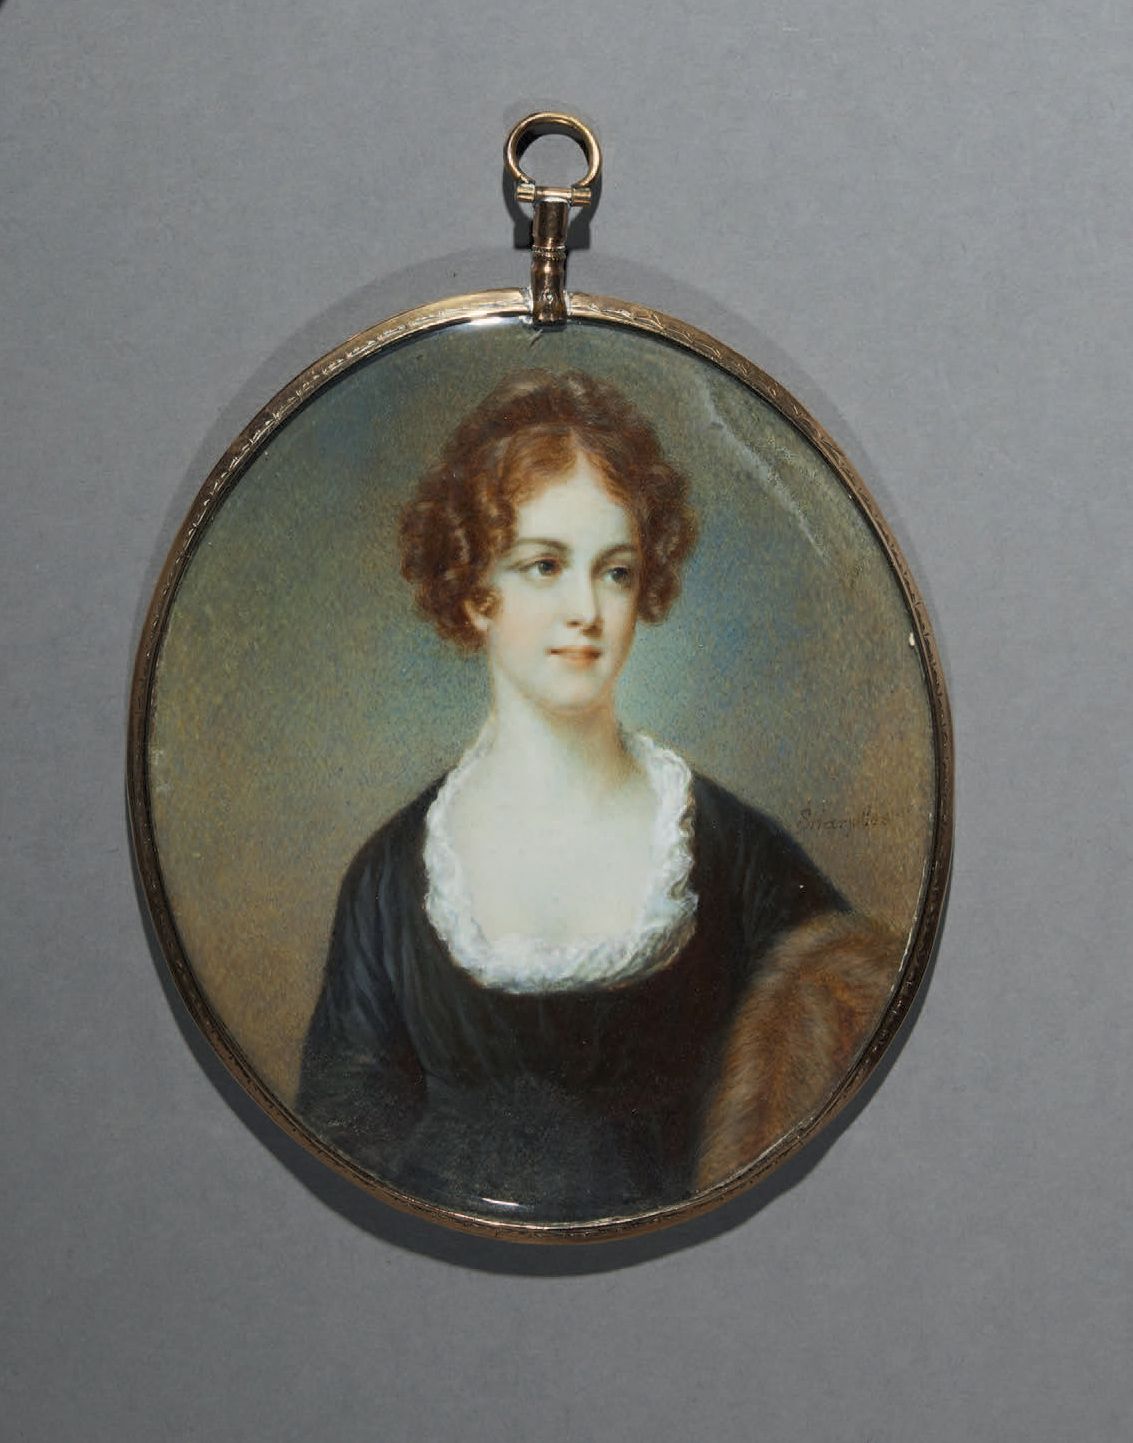 SHARPELS, Hellen - Ms James SHARPLES (1769-1849) 
穿着黑色天鹅绒连衣裙和毛皮围巾的年轻女子的画像



象牙上&hellip;